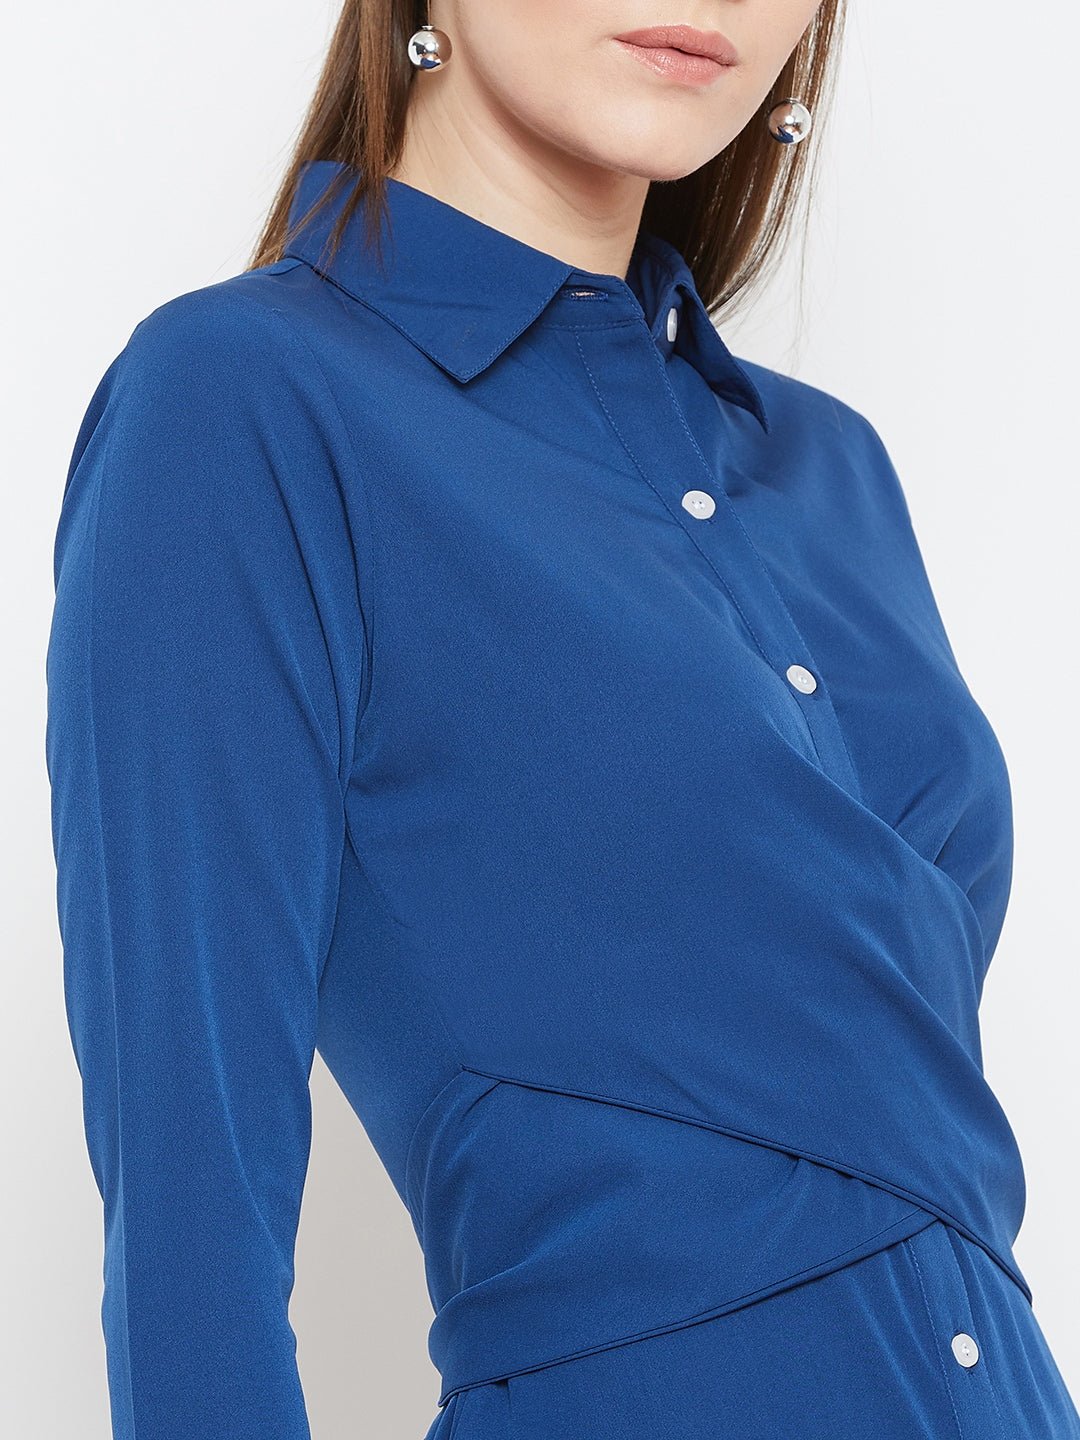 Folk Republic Women Solid Blue Collared Neck Button-Up Curved Midi Shirt Dress - #folk republic#